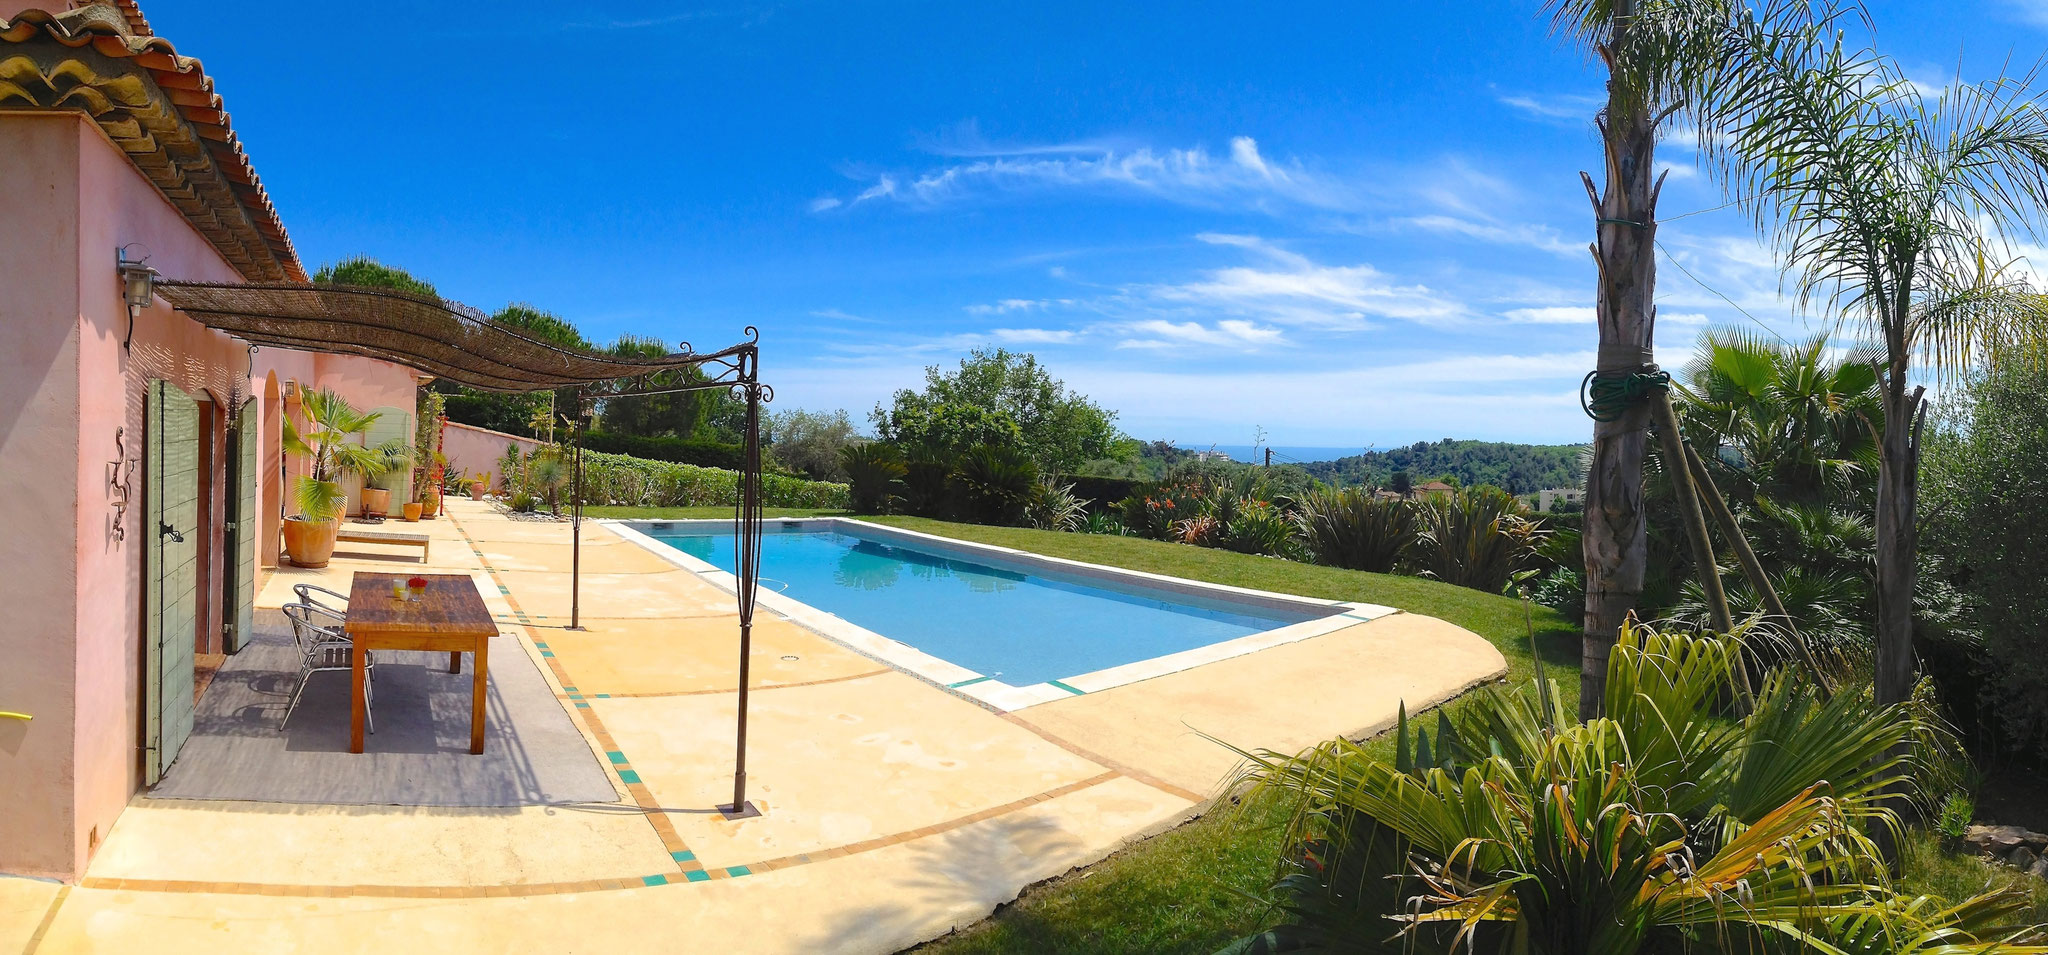 terrasse piscine location saisoniere villa maison vacance alpes maritimes france vence antibes nice cannes